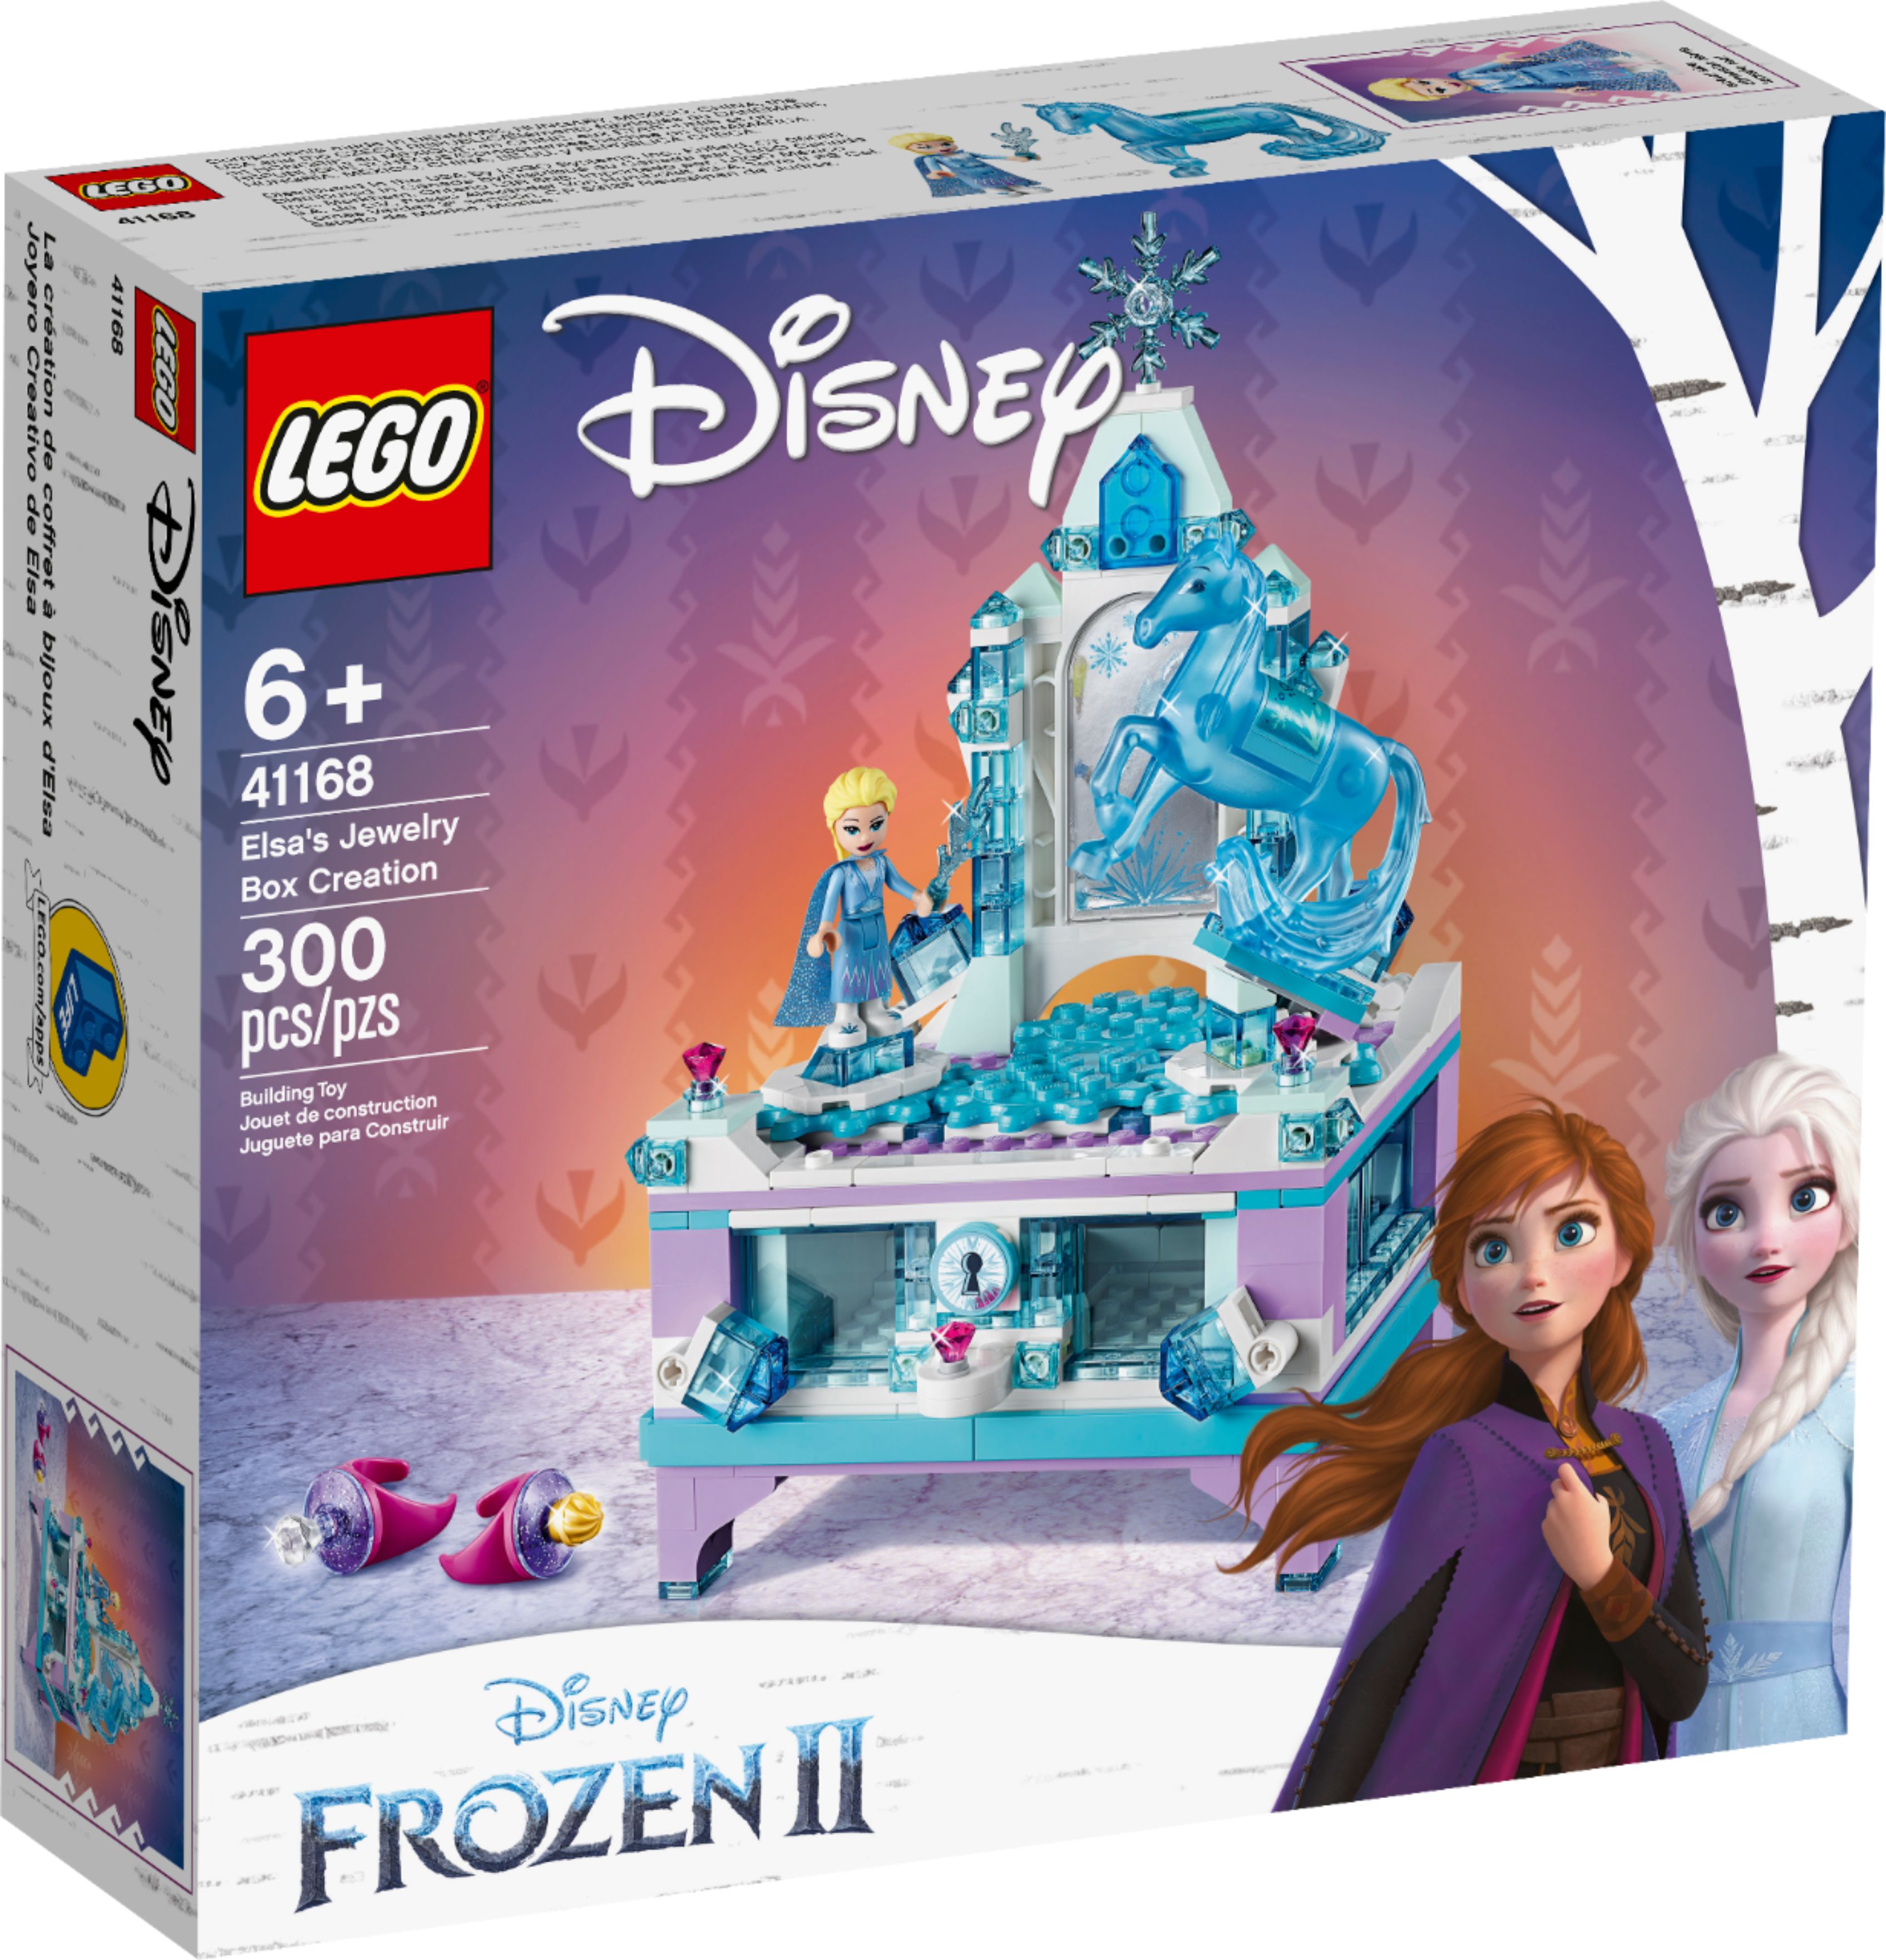 Angle View: LEGO - Disney Frozen II Elsa's Jewelery Box 41168